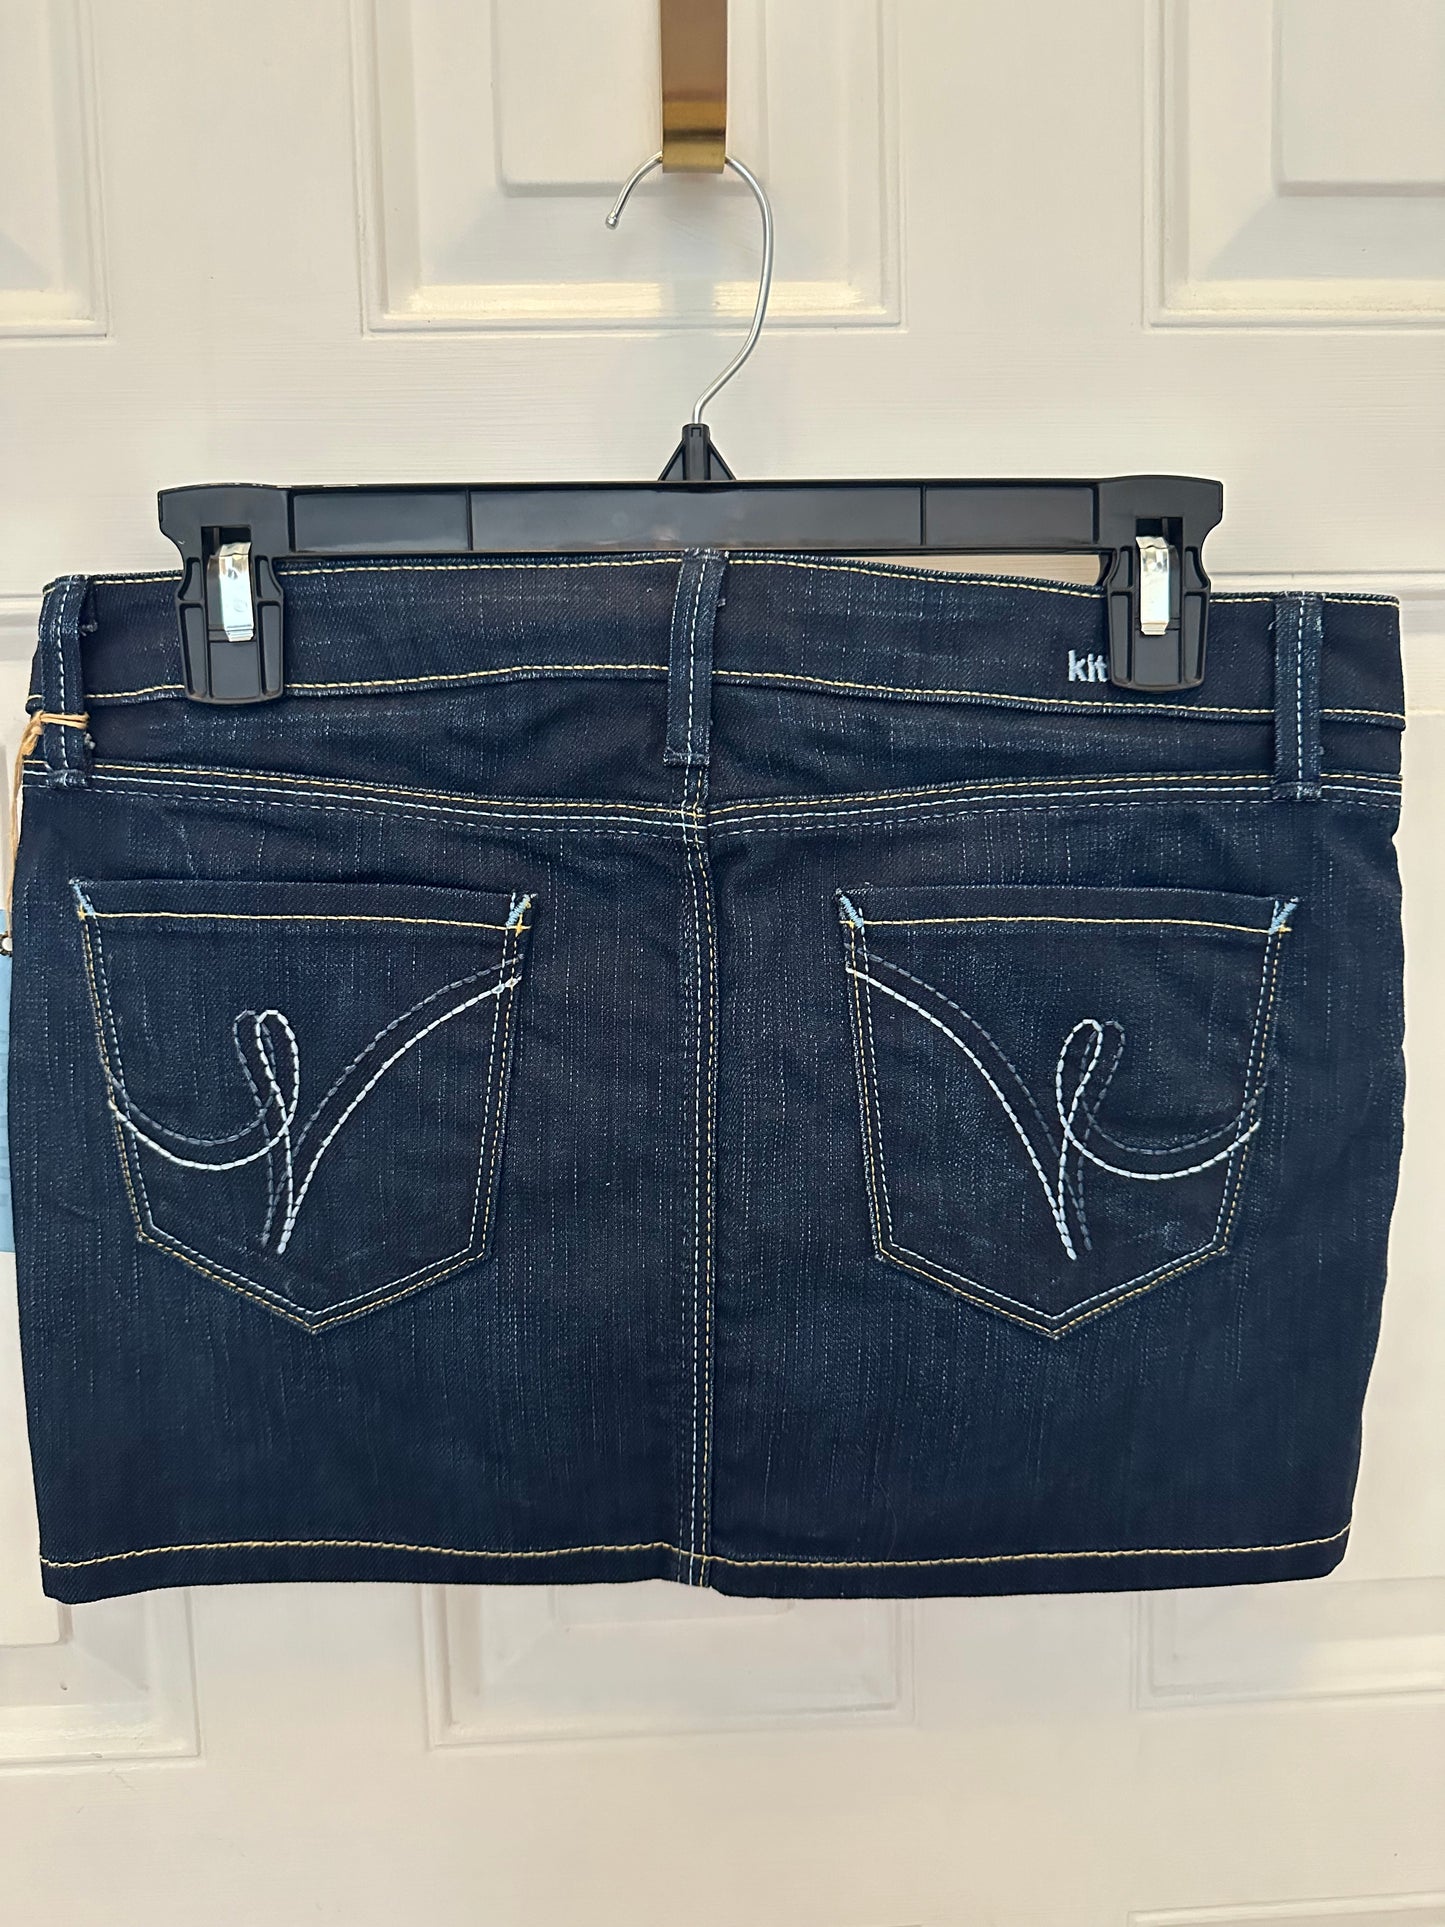 NWT New Kitson Denim Jeans Skirt Sz 27